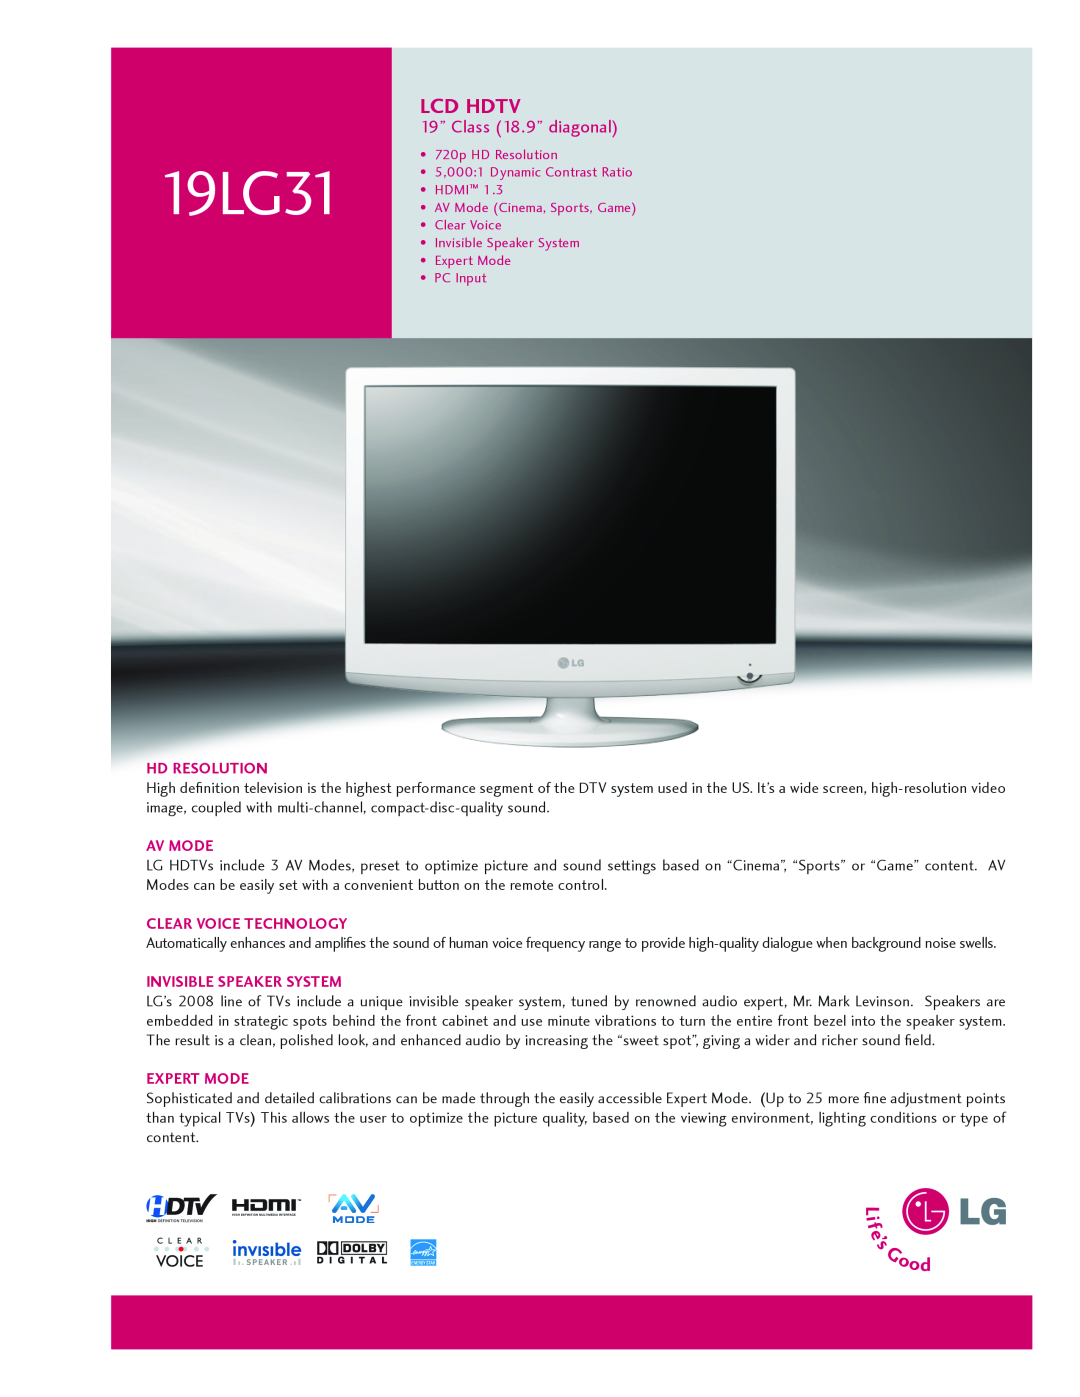 Goldstar 19LG31 manual 19” Class 18.9” diagonal, Lcd Hdtv, HD Resolution, Av Mode, Clear Voice Technology, Expert Mode 